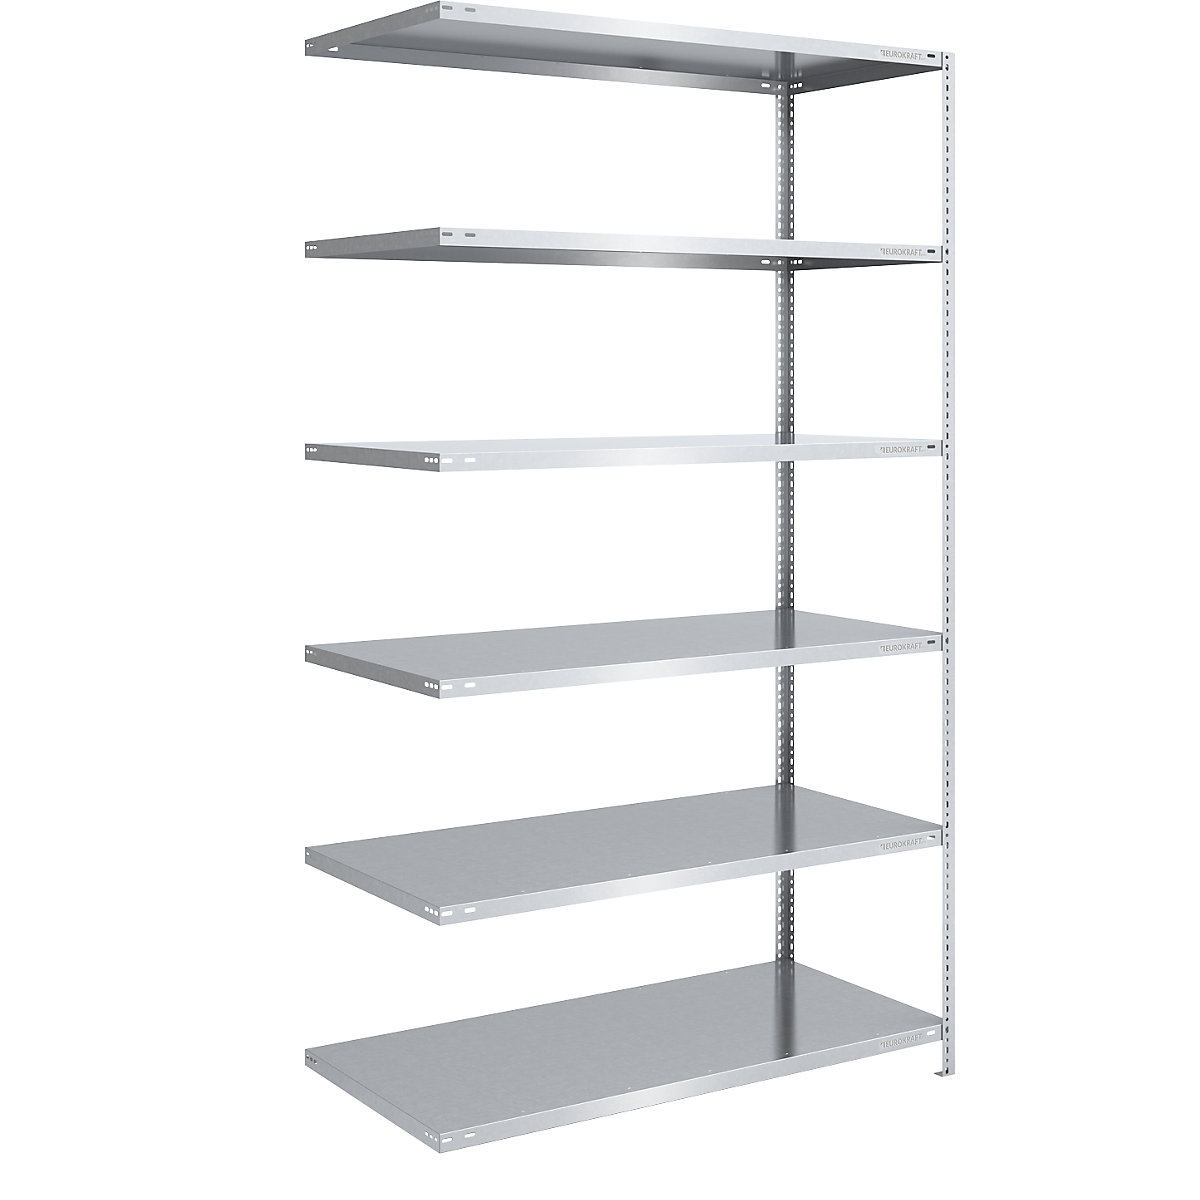 Bolt-together storage shelving, zinc plated, medium duty – eurokraft pro, shelf unit height 2500 mm, shelf width 1300 mm, depth 800 mm, extension shelf unit-14